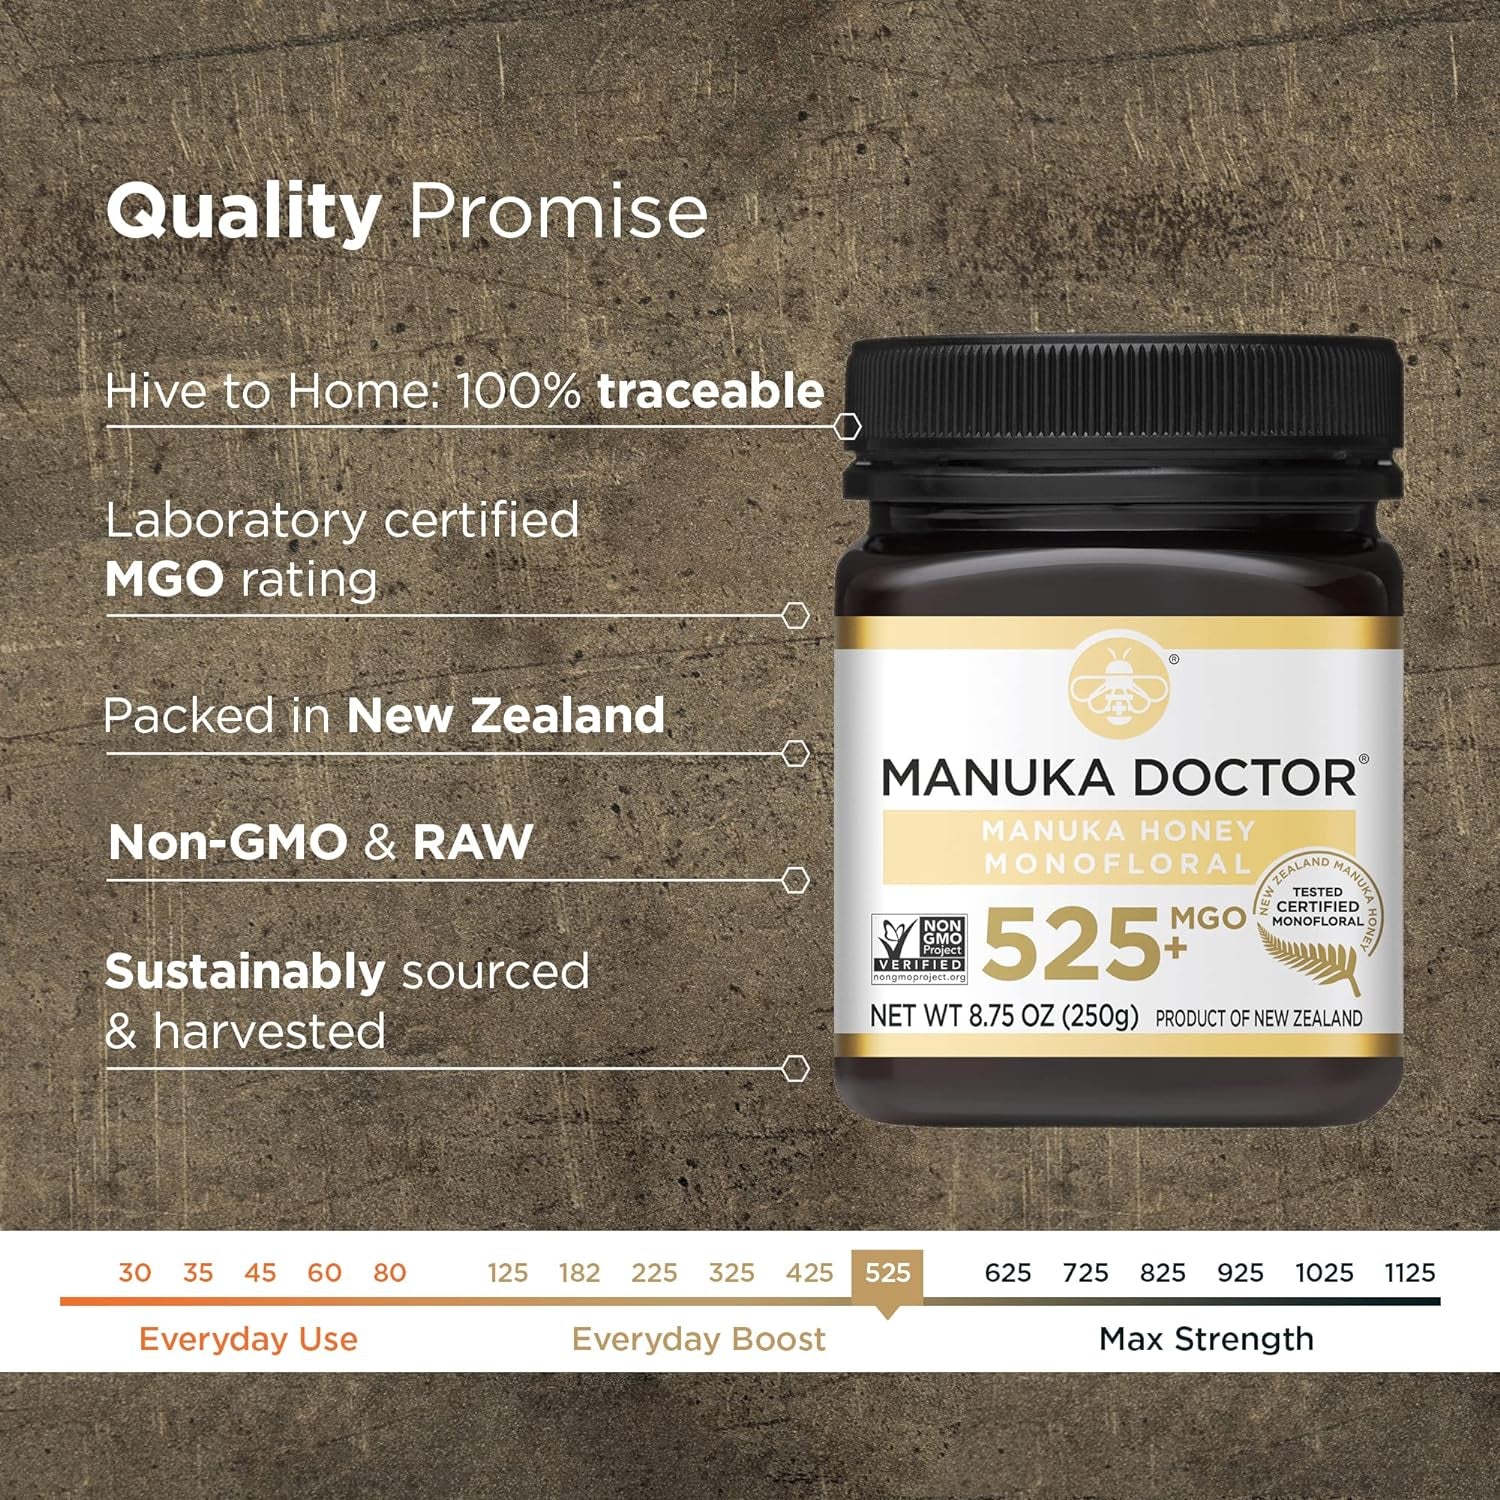 MANUKA DOCTOR - MGO 525+ Manuka Honey Monofloral, 100% Pure New Zealand Honey. Certified. Guaranteed. RAW. Non-Gmo (8.75 Oz)